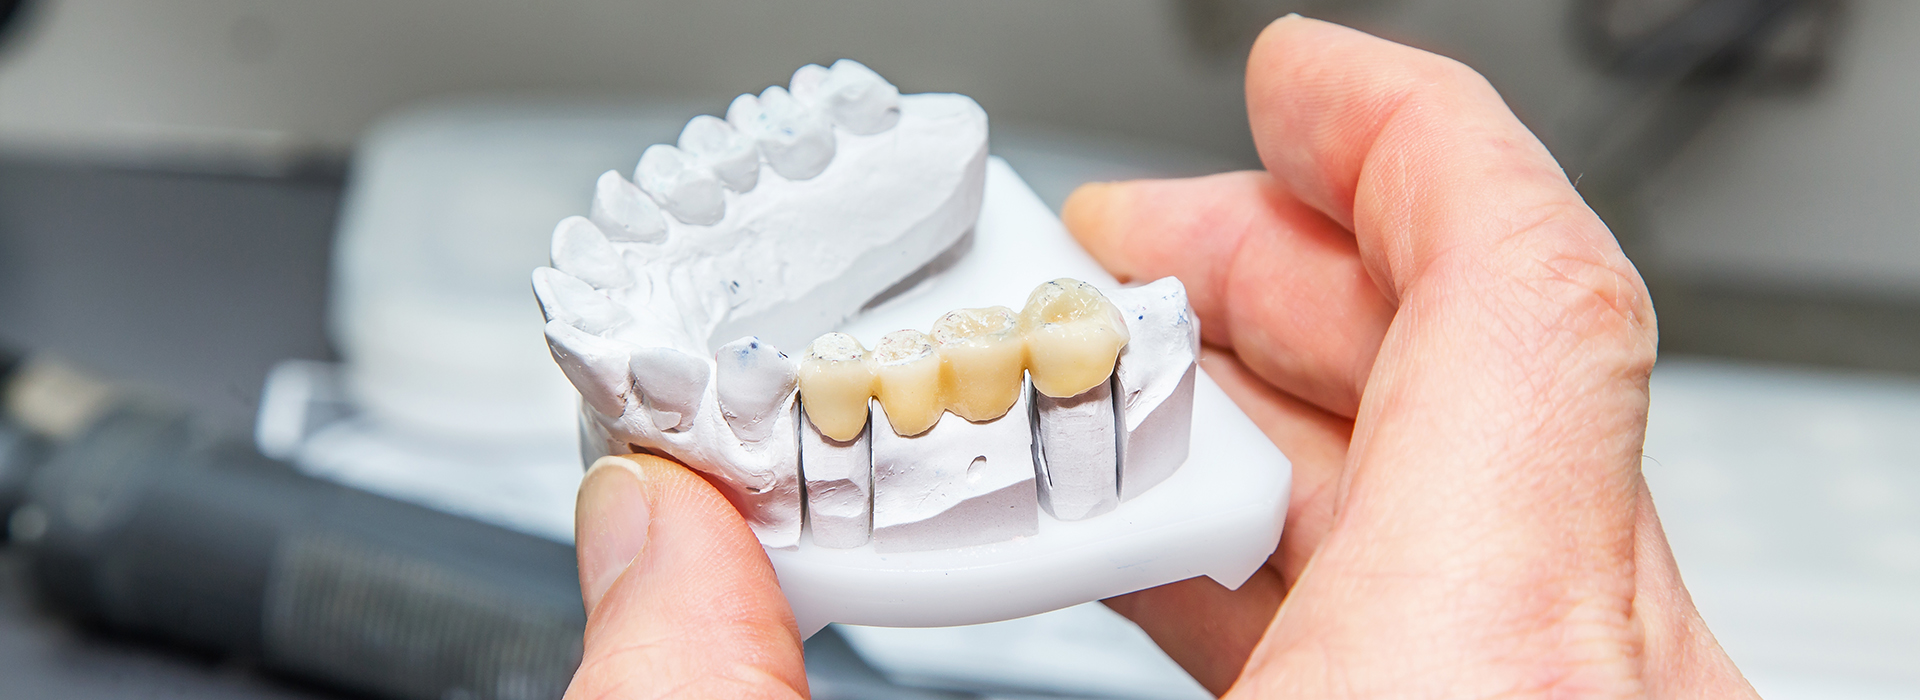 Norwalk Dental Center | Implant Dentistry, Digital Radiography and Dental Cleanings